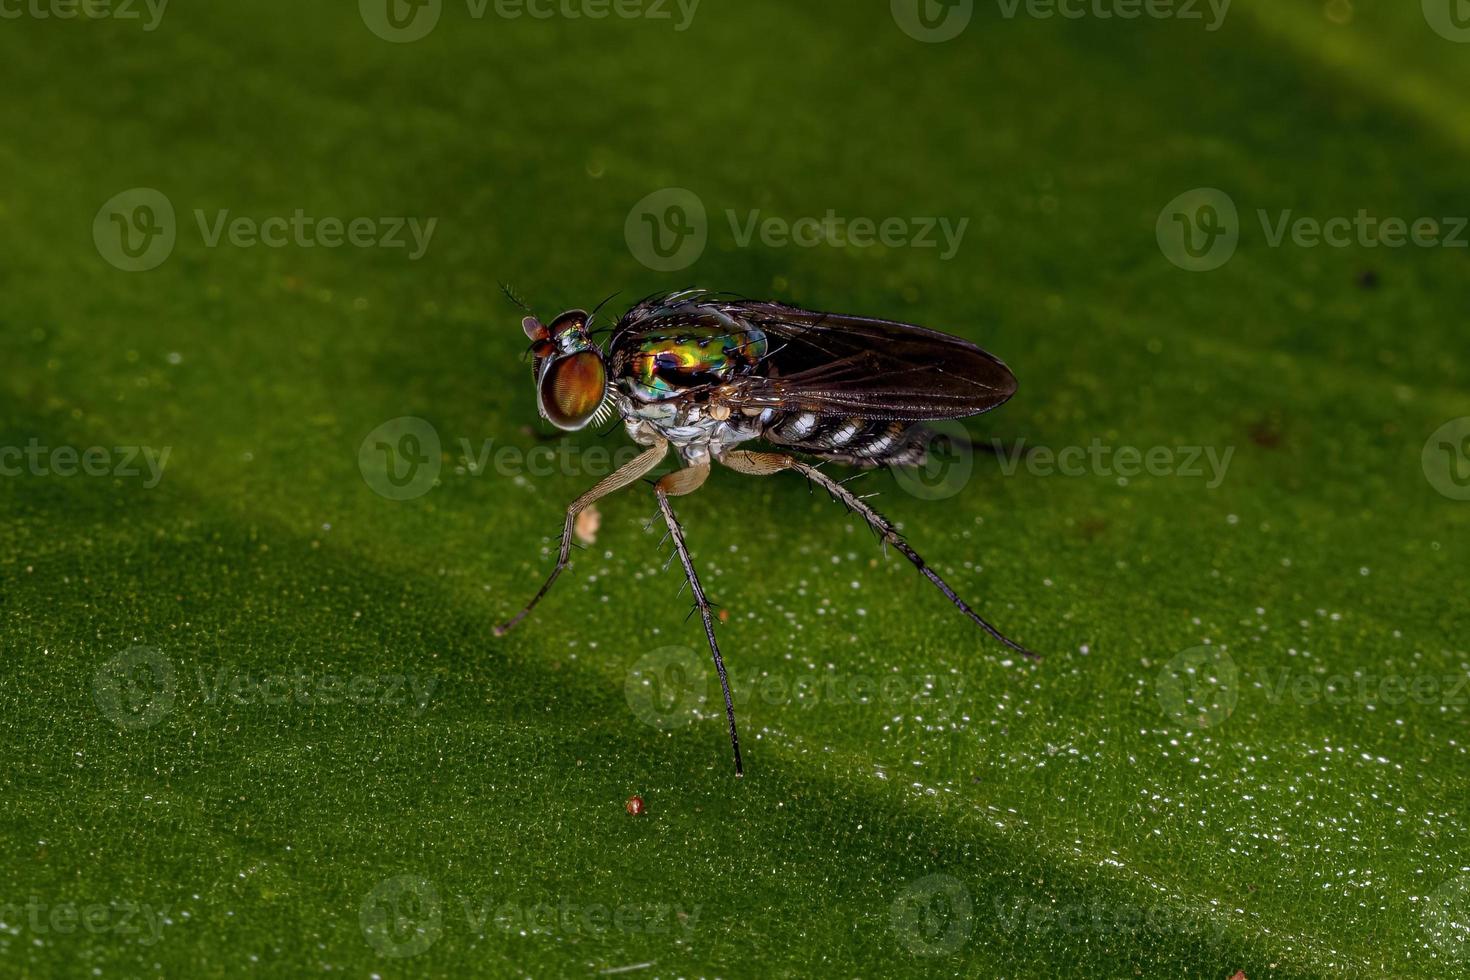 Adult Long-legged Fly photo